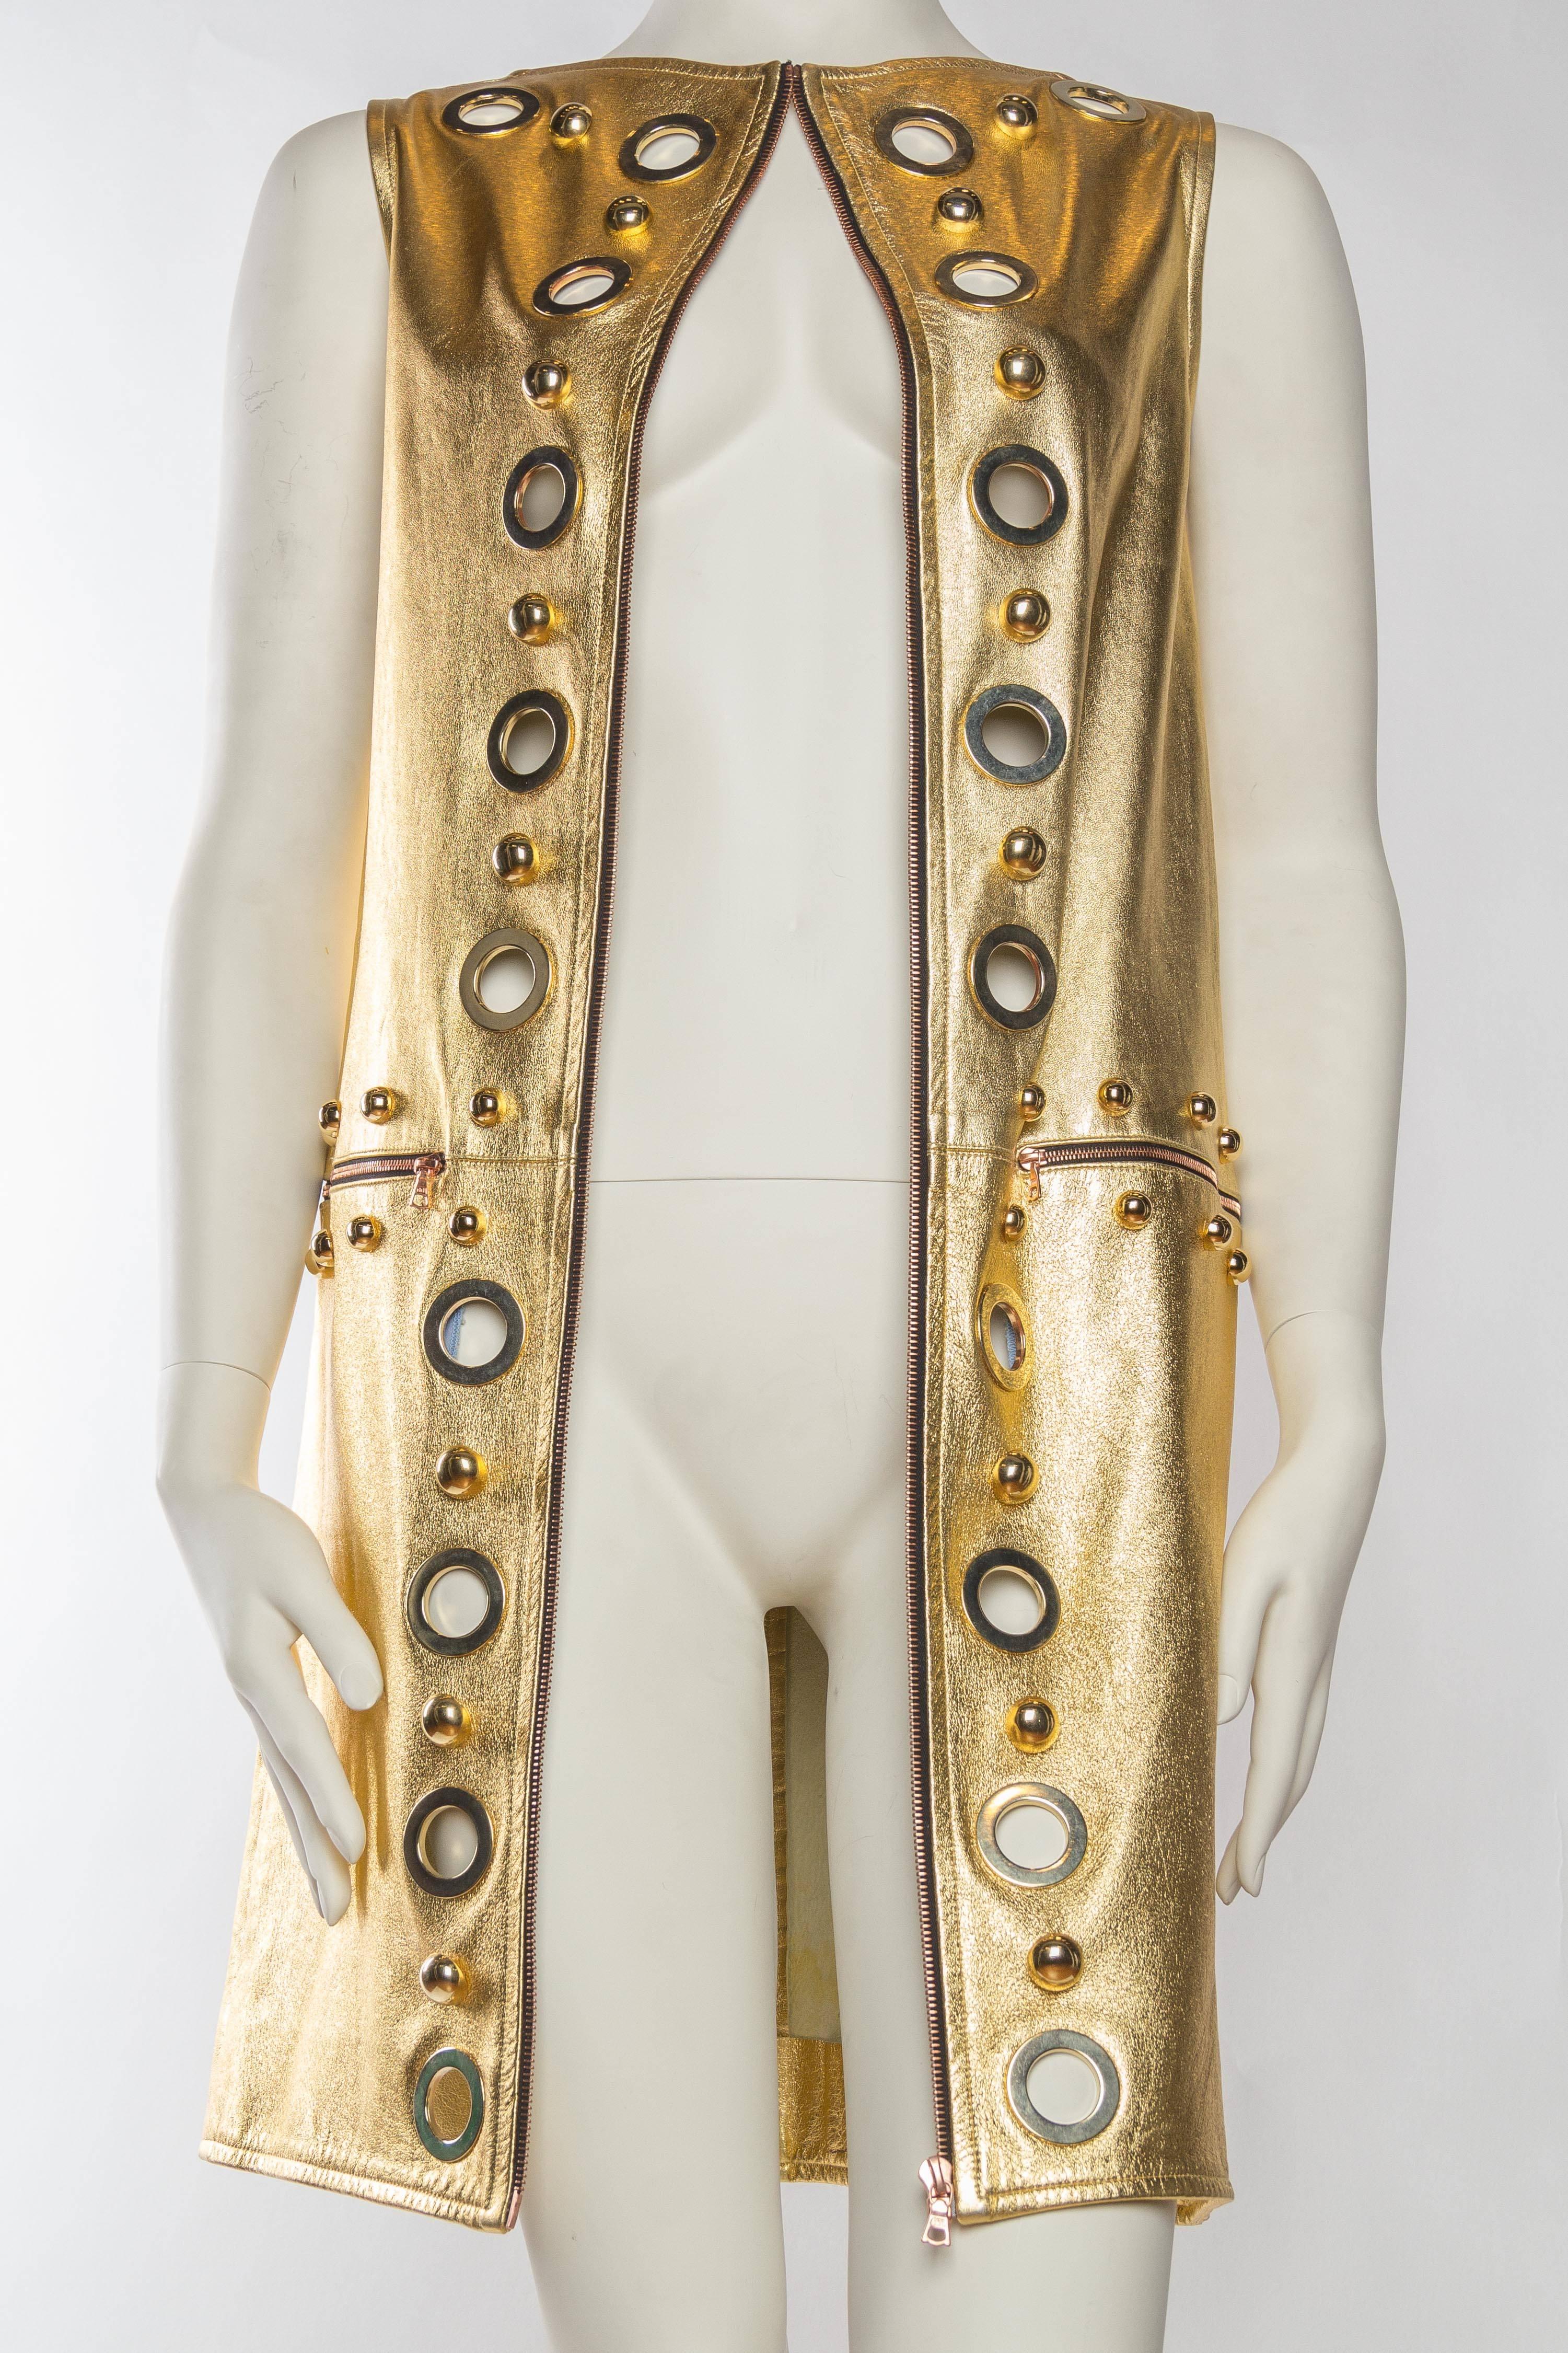 Studded gold leather mod zipper dress made from luscious soft lambskin.